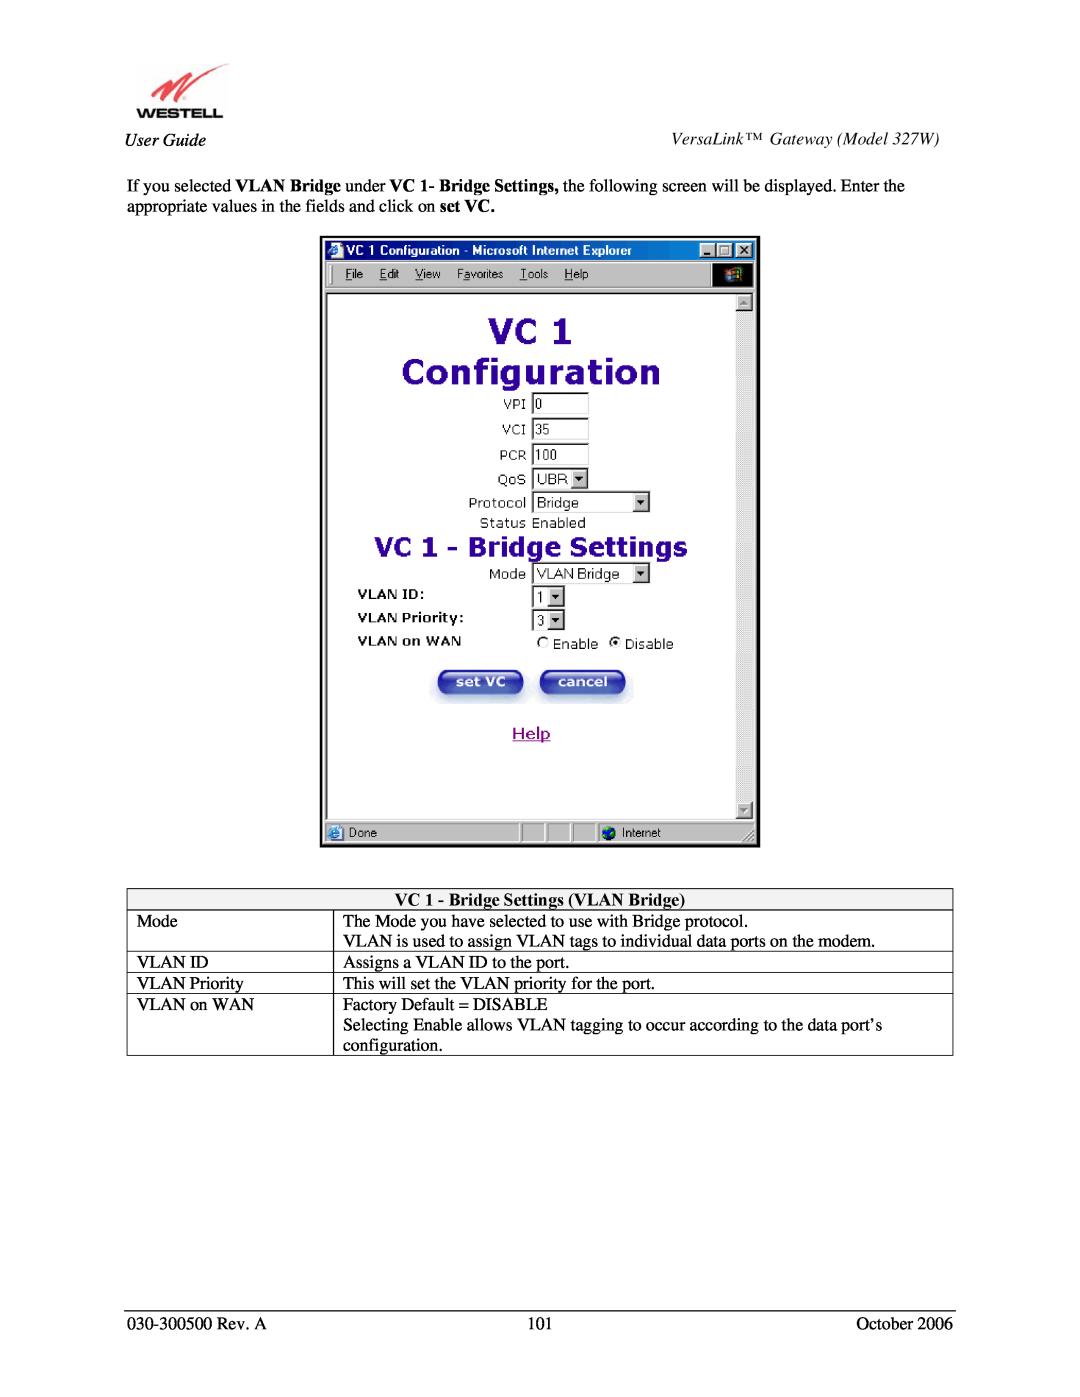 Westell Technologies 327W manual VC 1 - Bridge Settings VLAN Bridge 